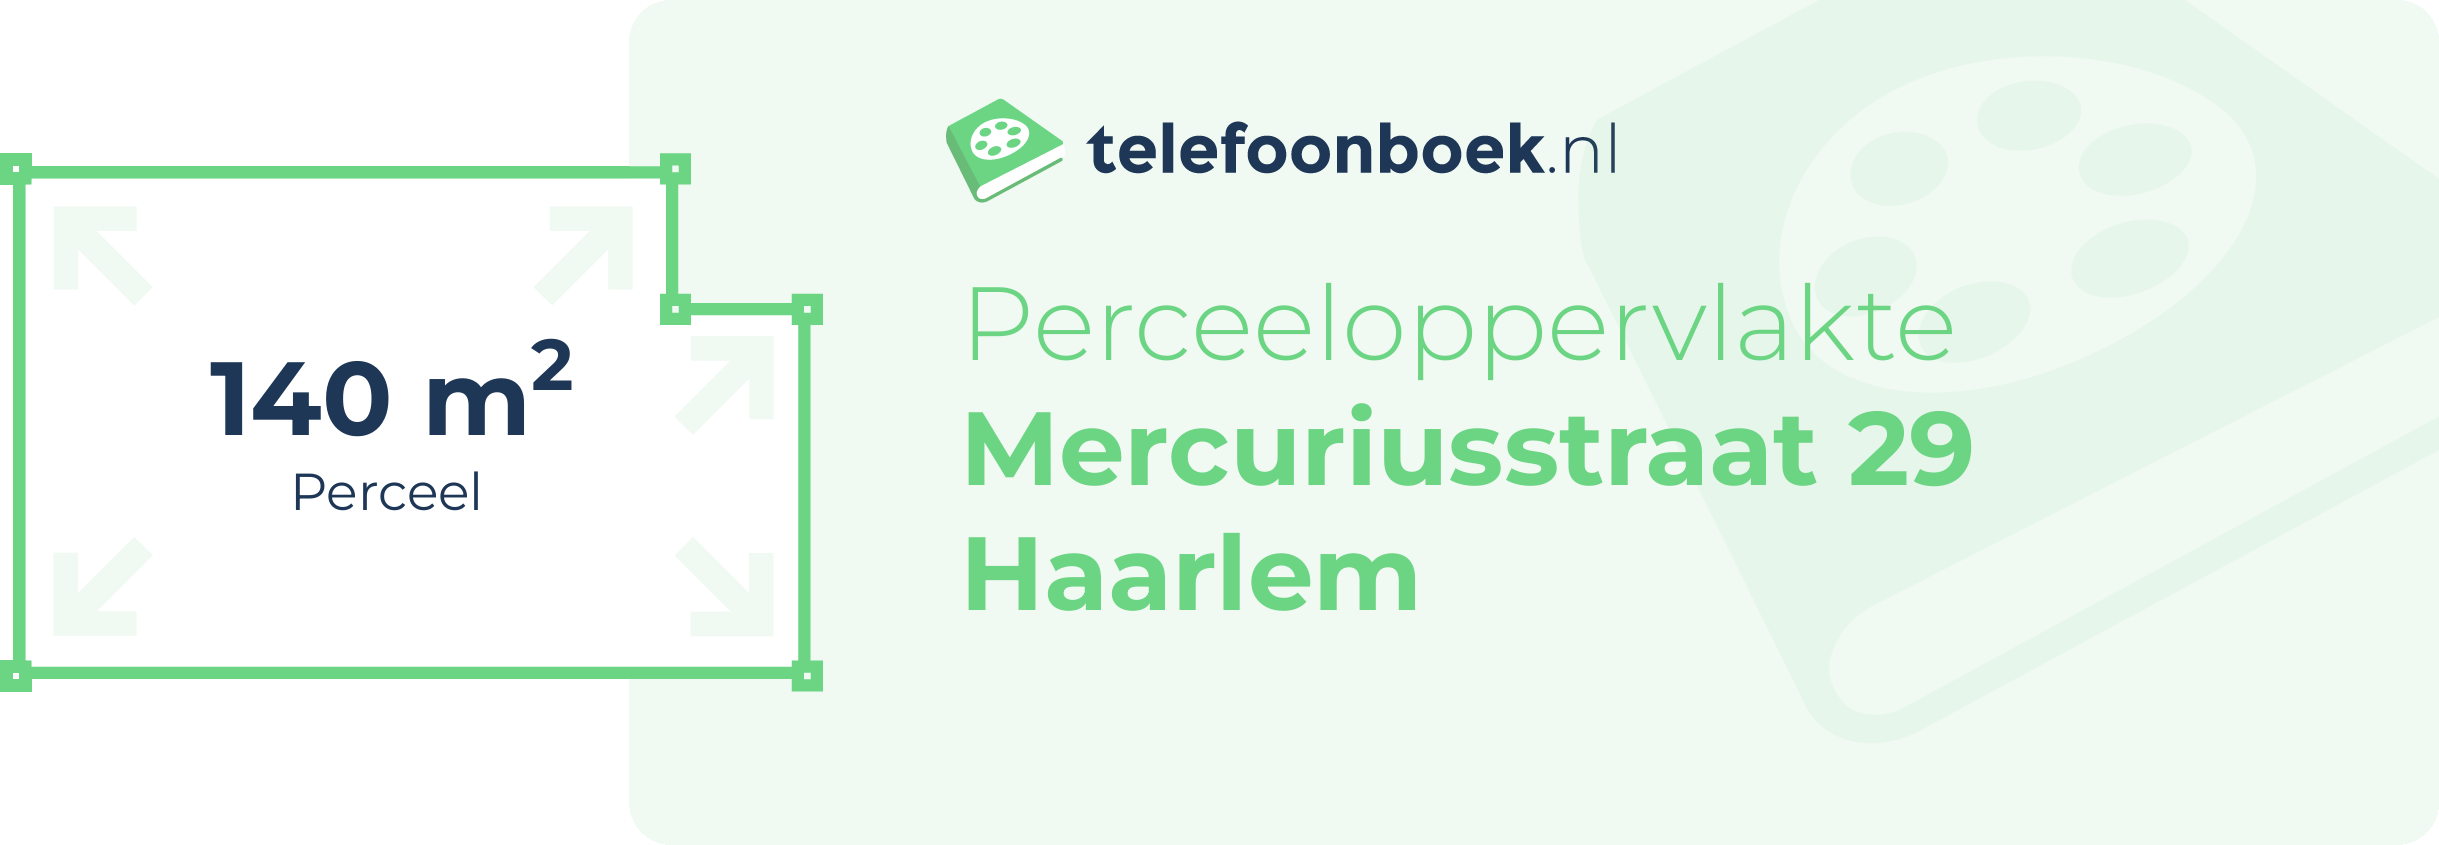 Perceeloppervlakte Mercuriusstraat 29 Haarlem